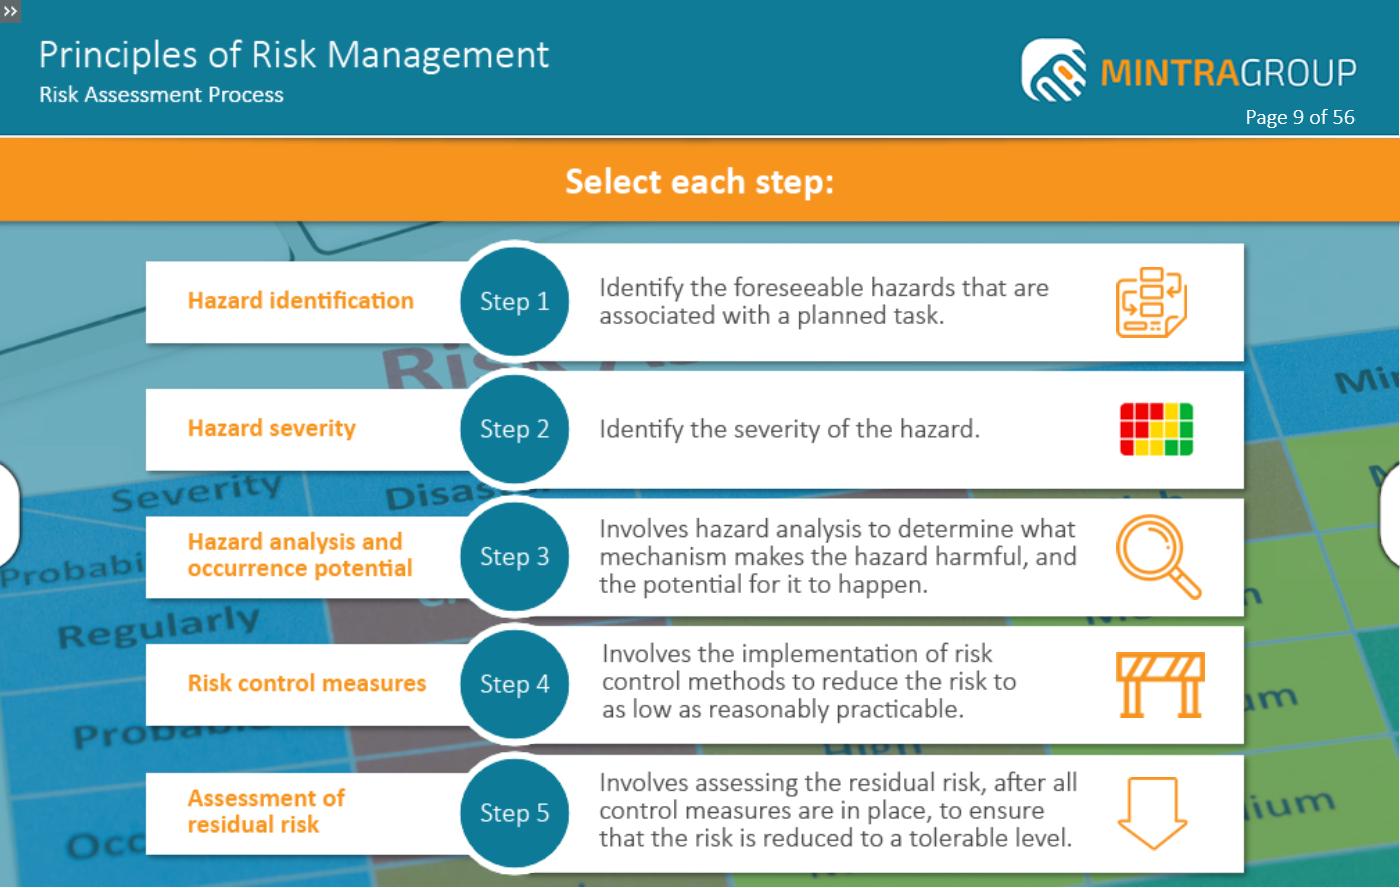 Principles of Risk Management Training